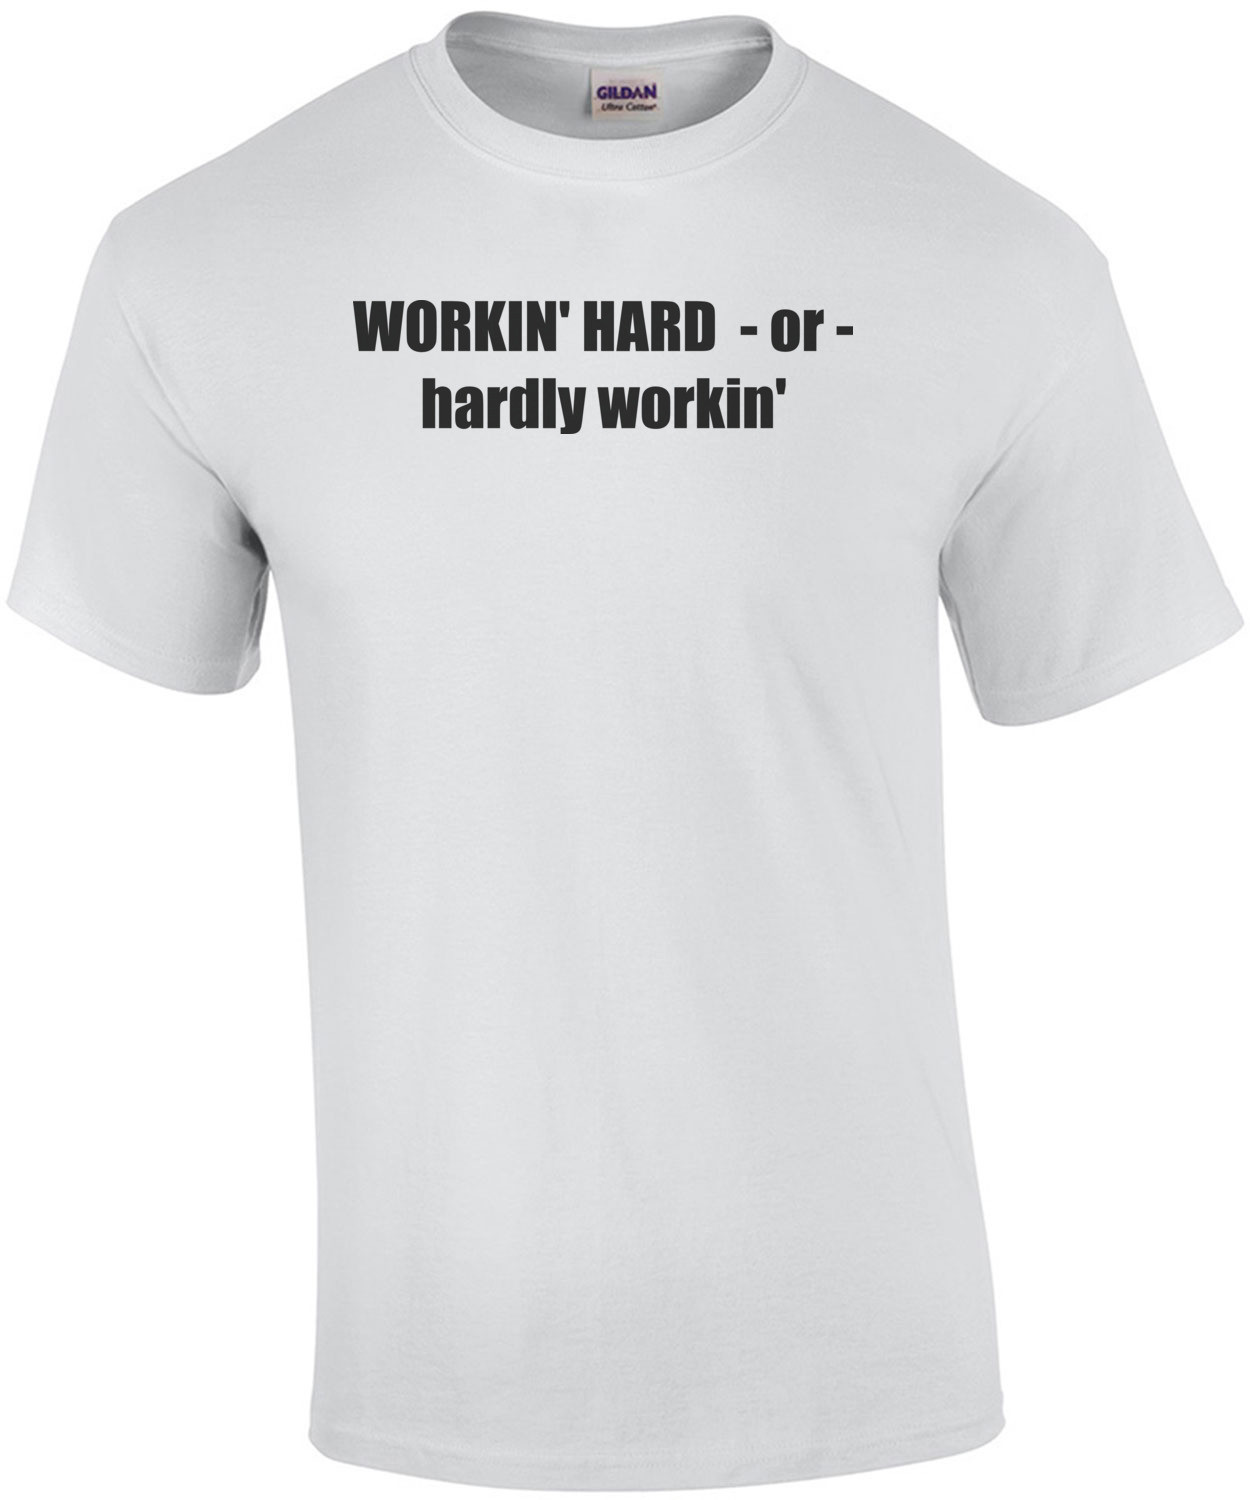 WORKIN' HARD  - or - hardly workin' funny Shirt